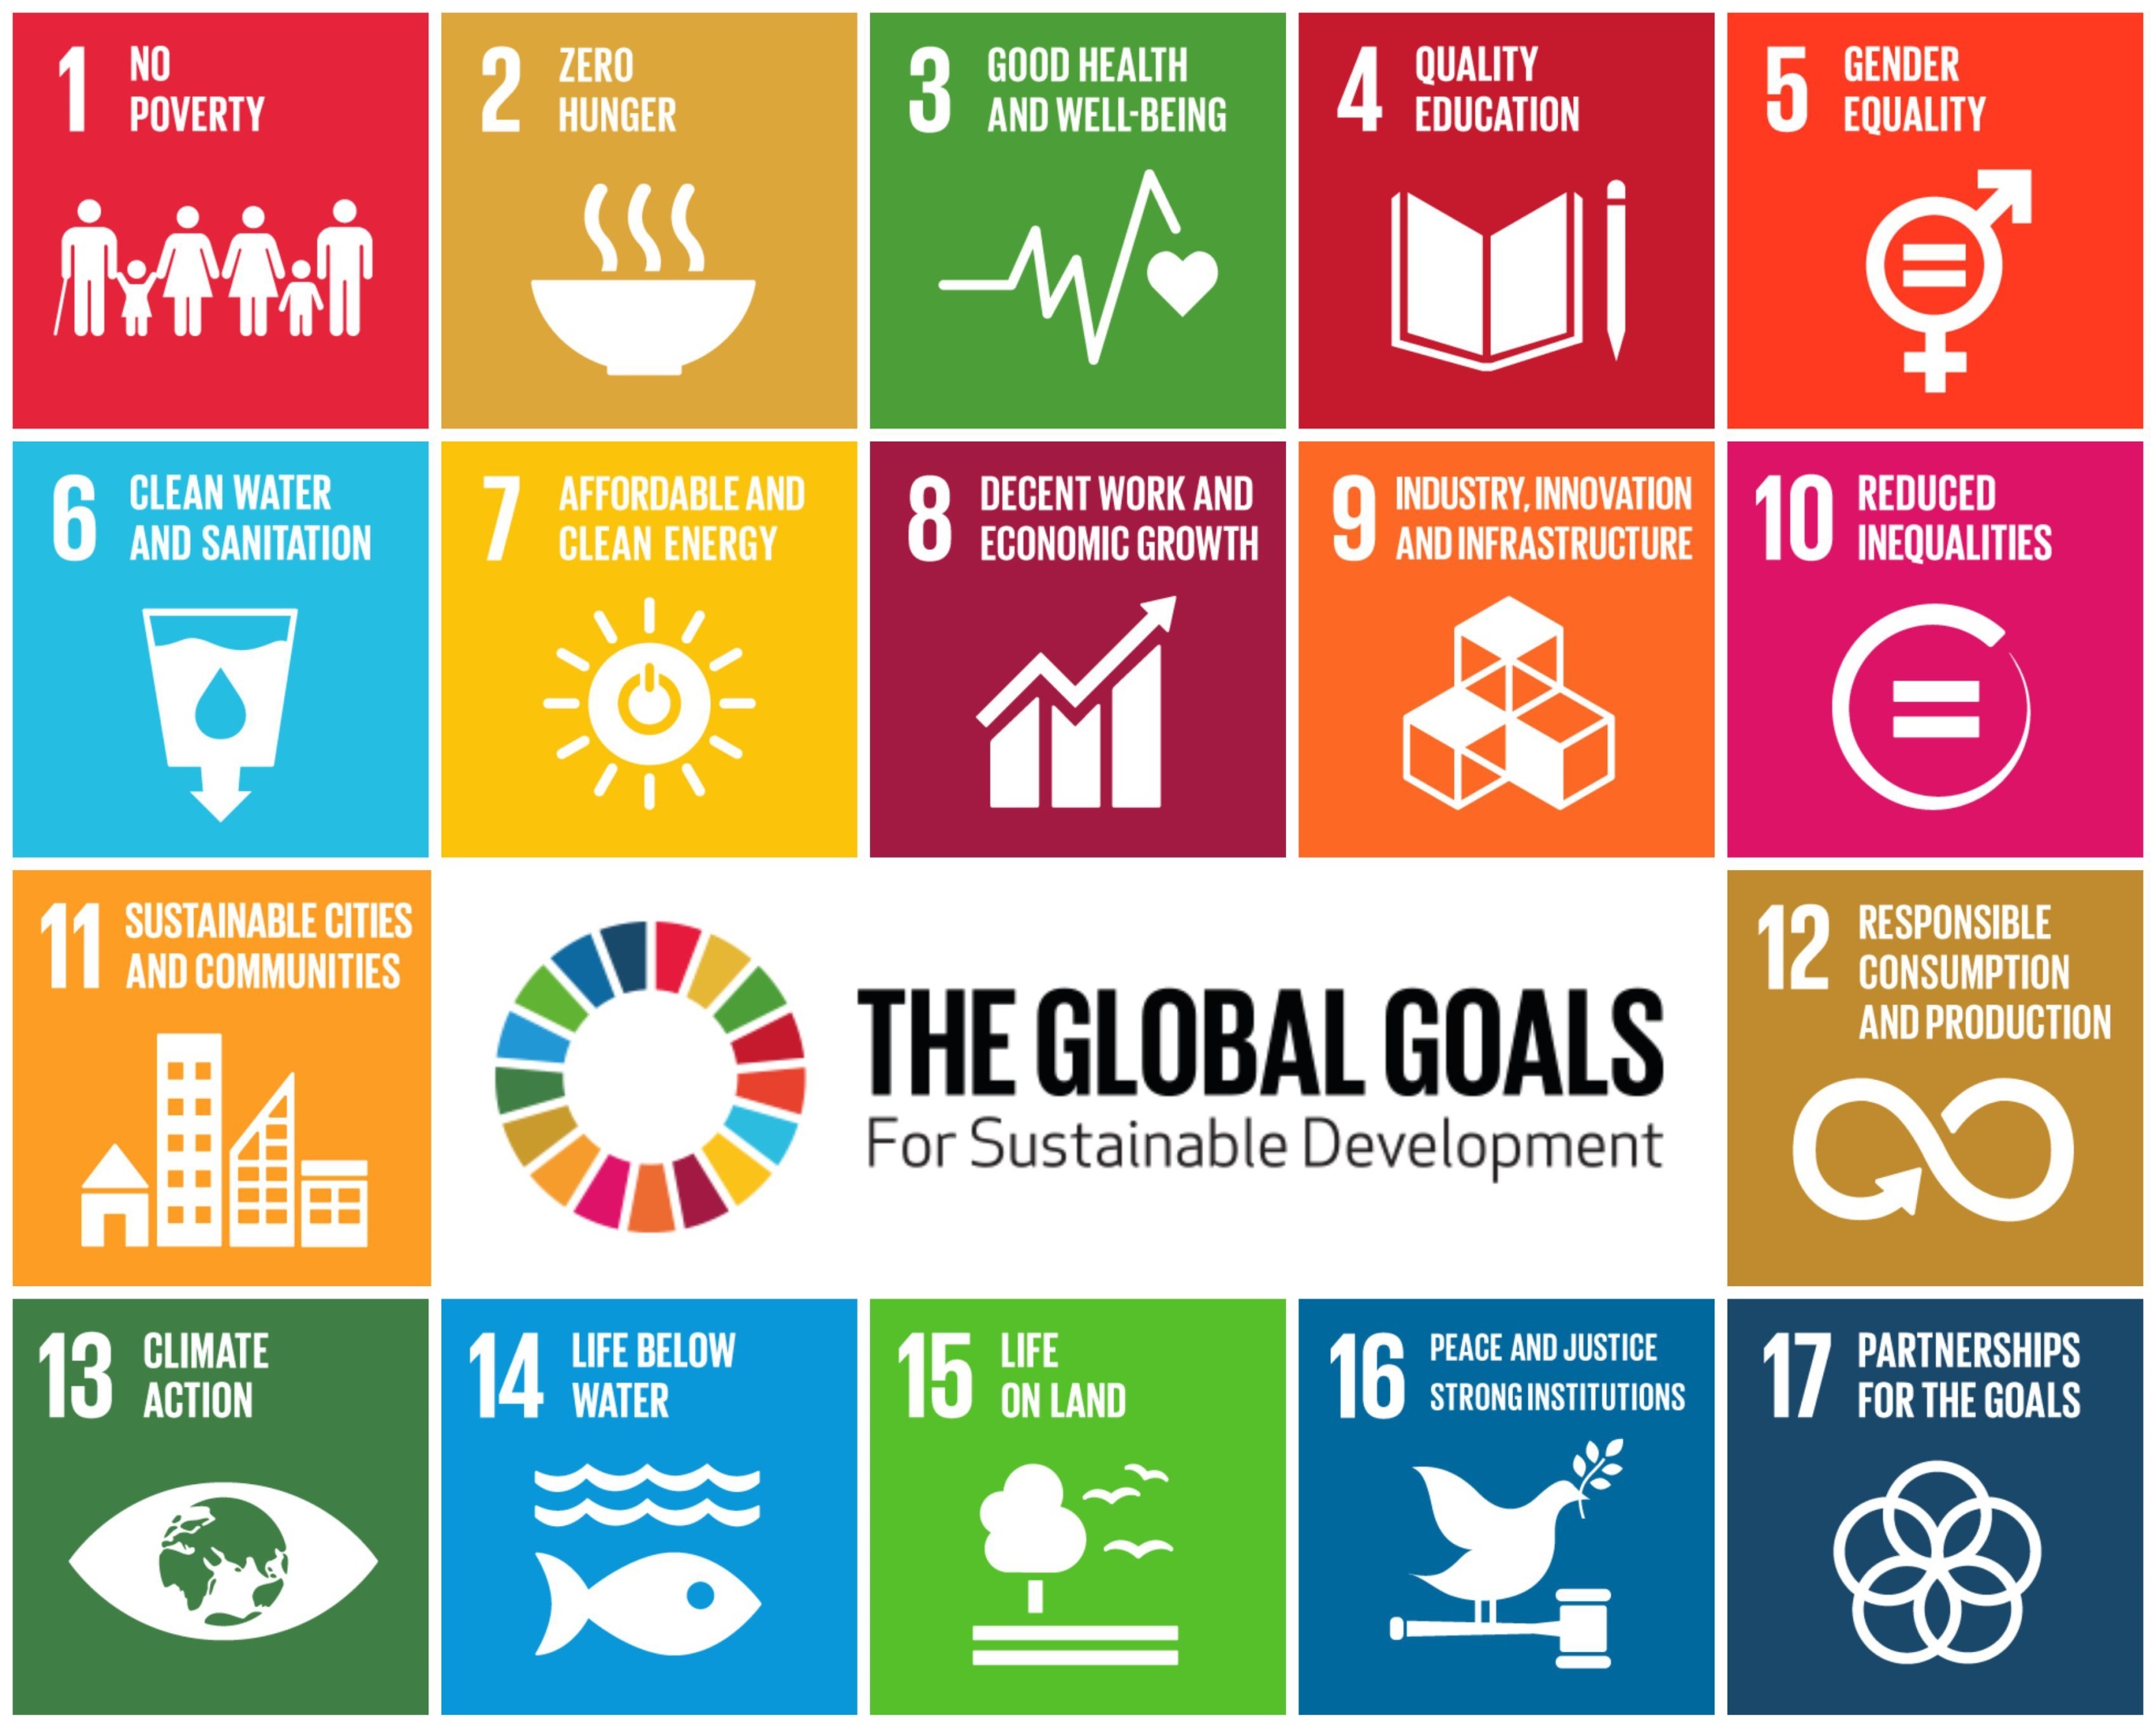 Schaubild "The Global Goals"